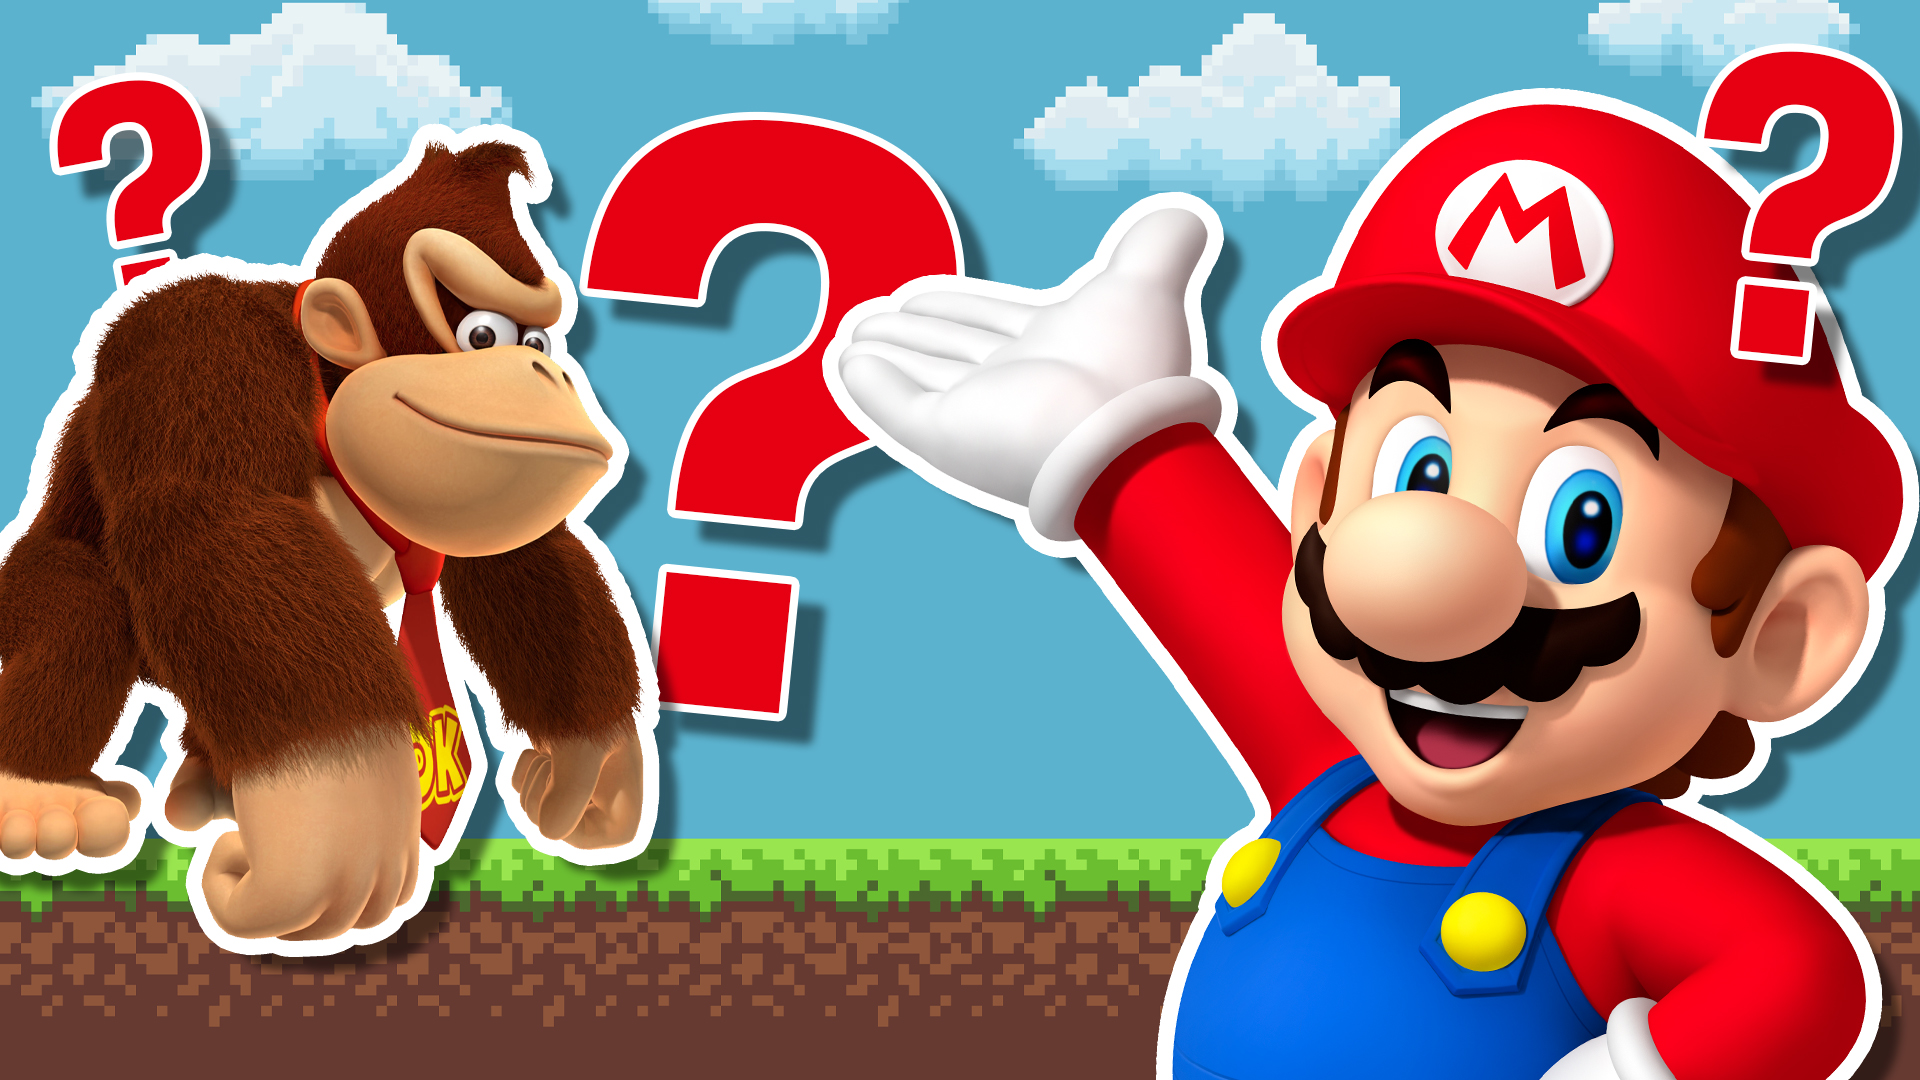 Nintendo's Mario and Donkey Kong